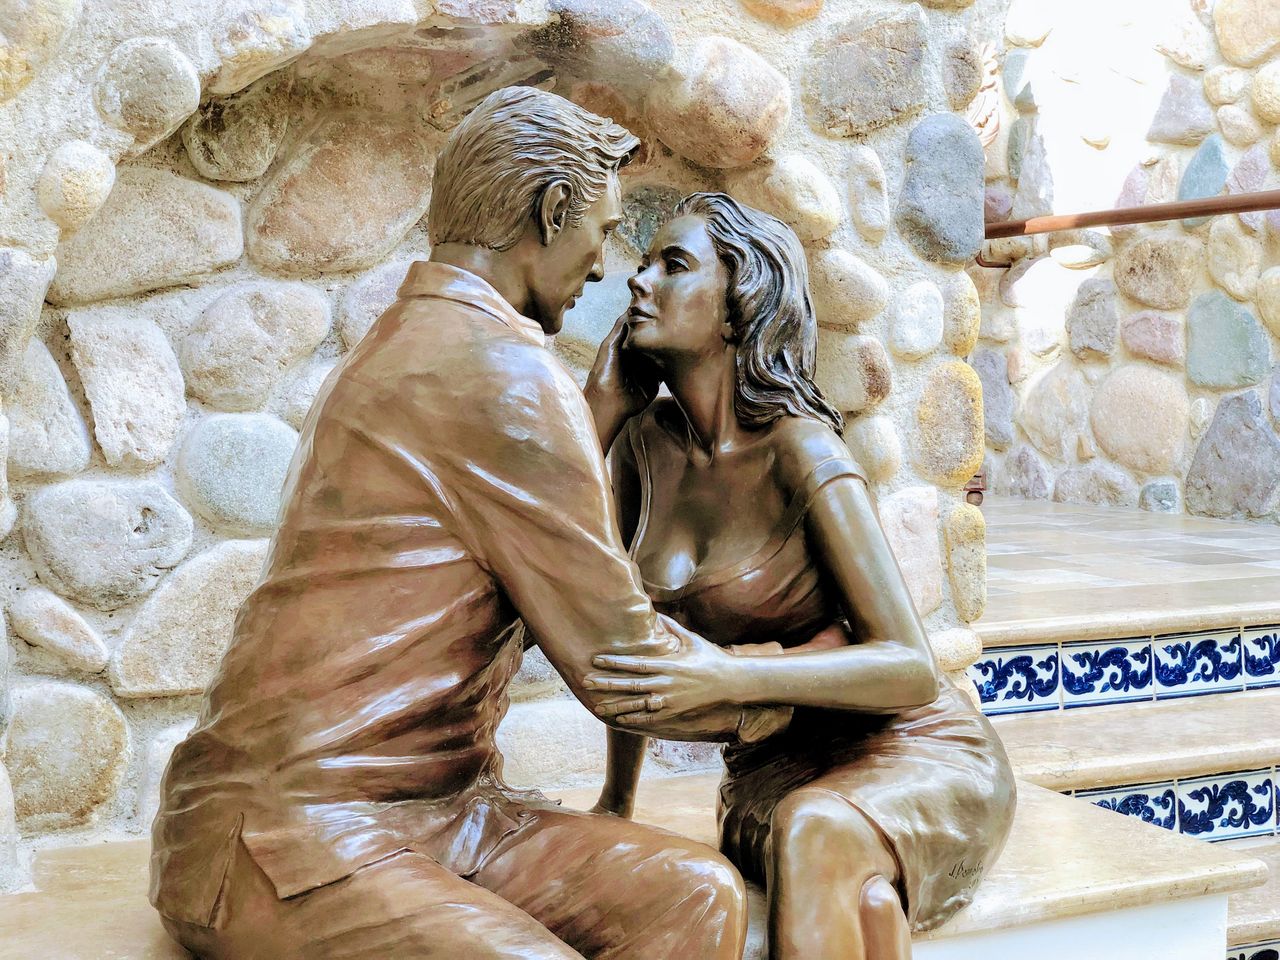 Richard Burton and Elizabeth Taylor statue at the entrance to Casa